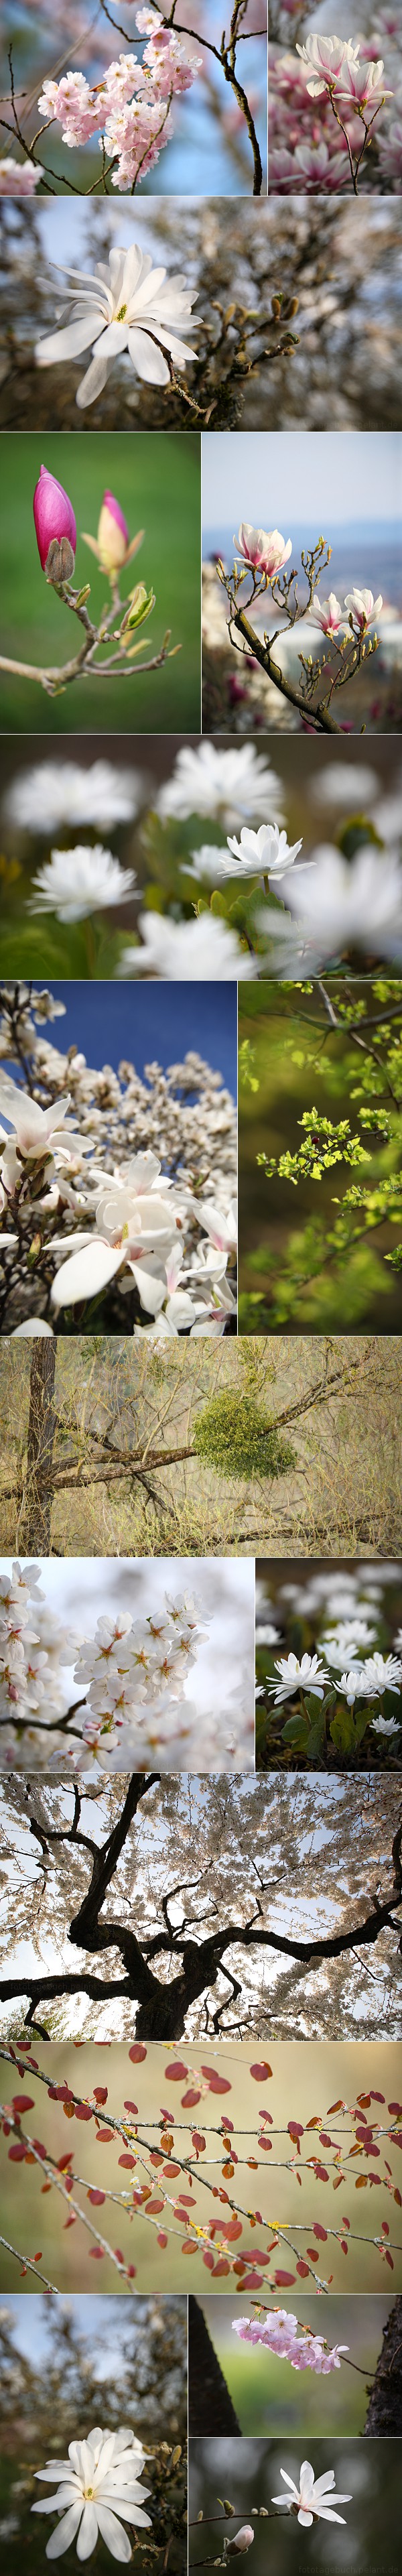 flowering magnolia and cherry in the botanical garden of Tbingen